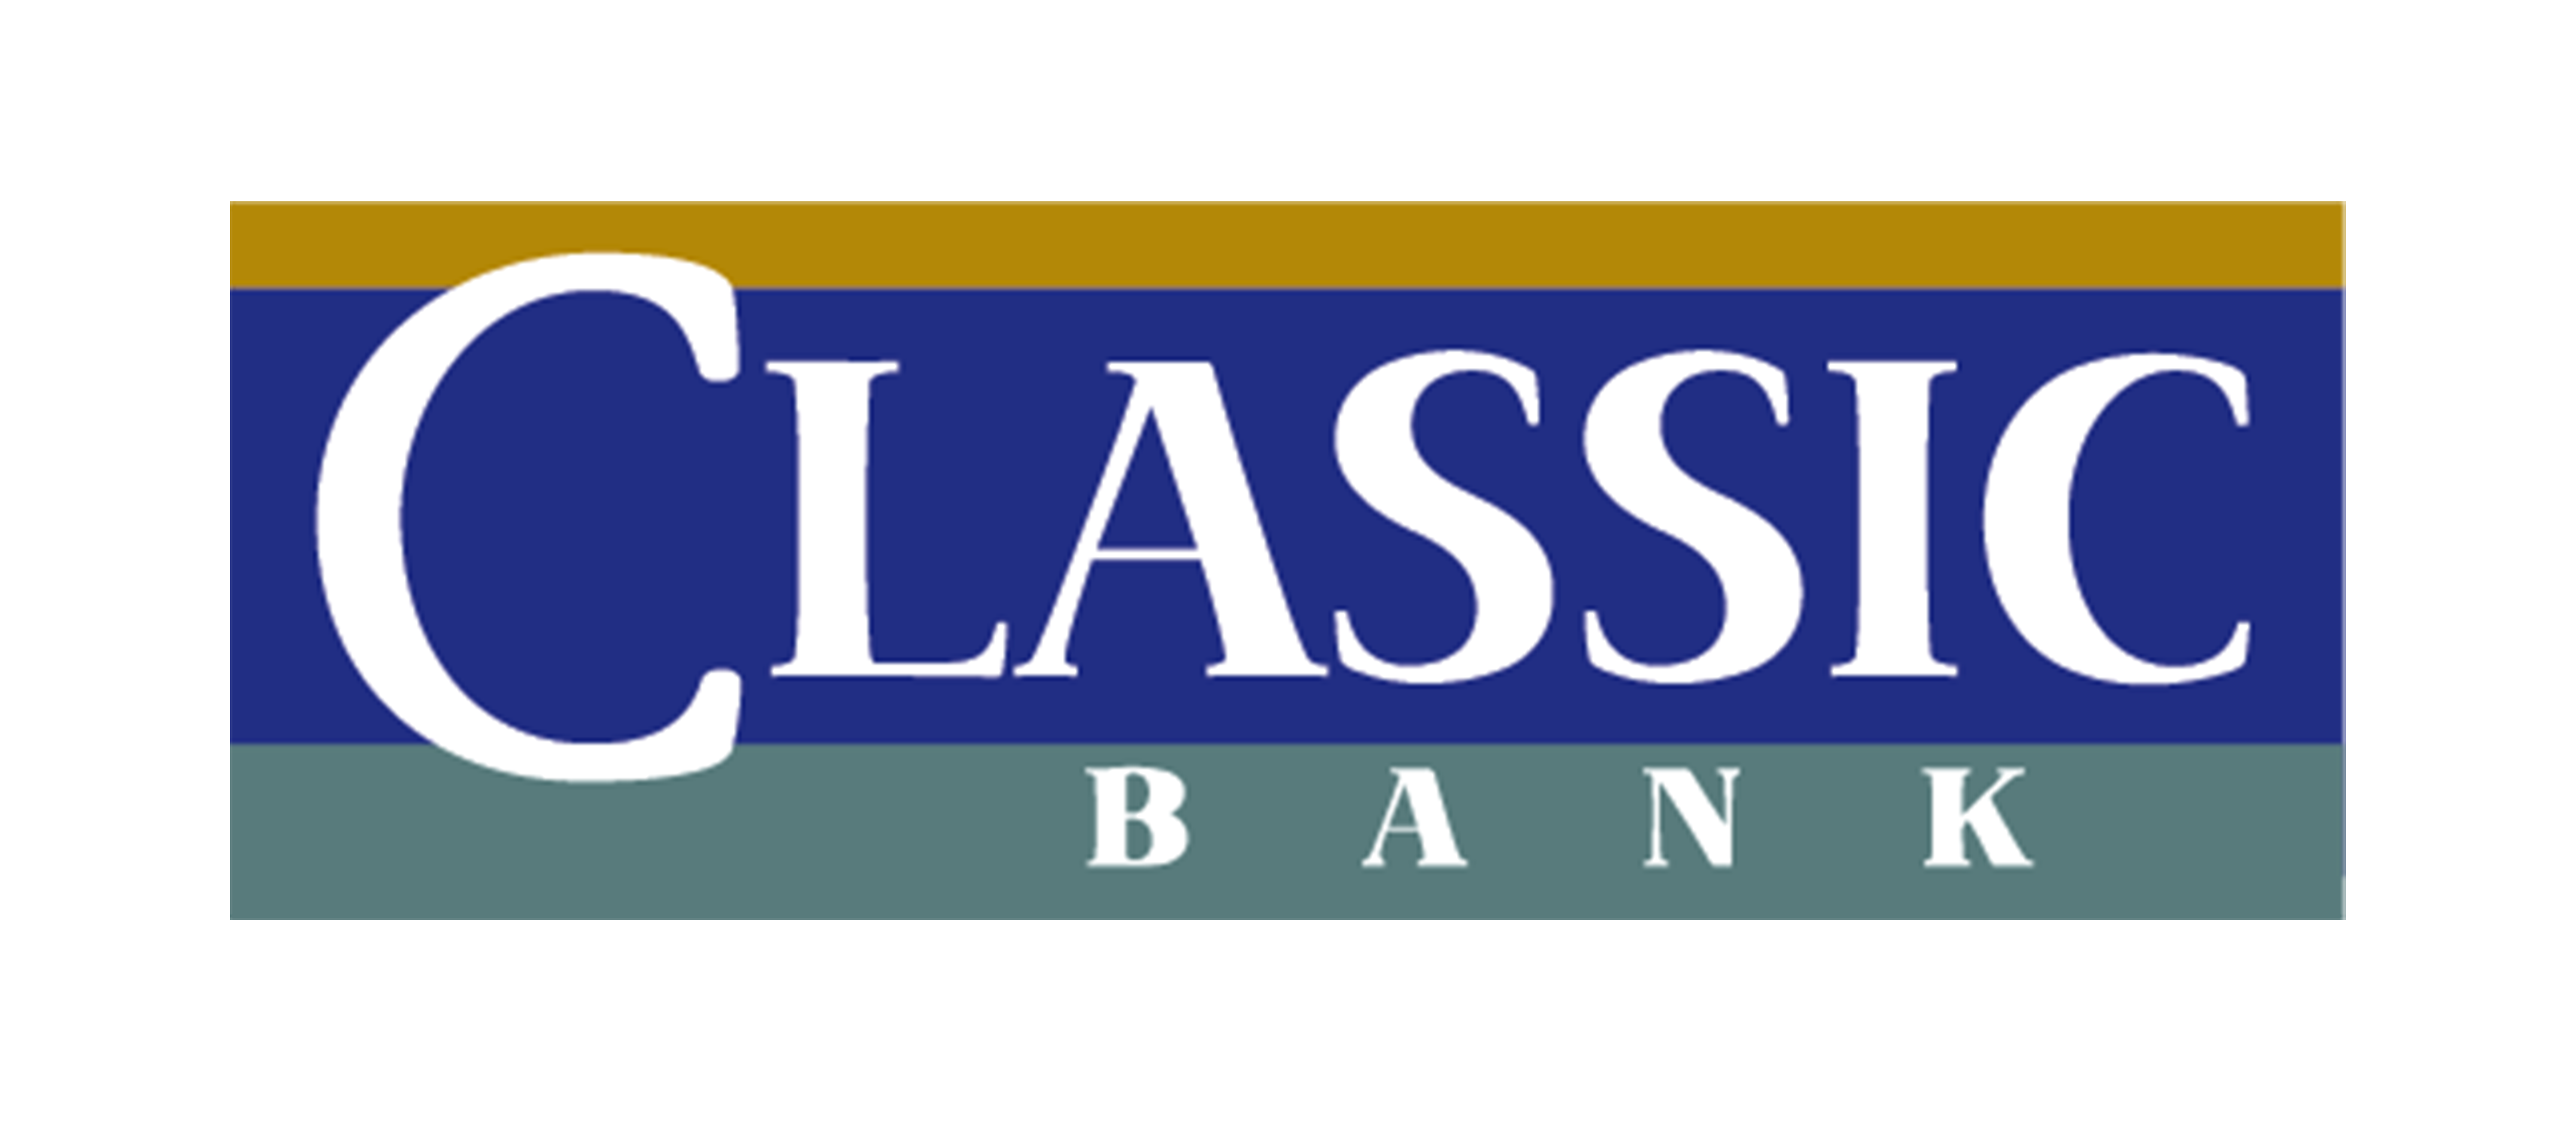 Classic Bank